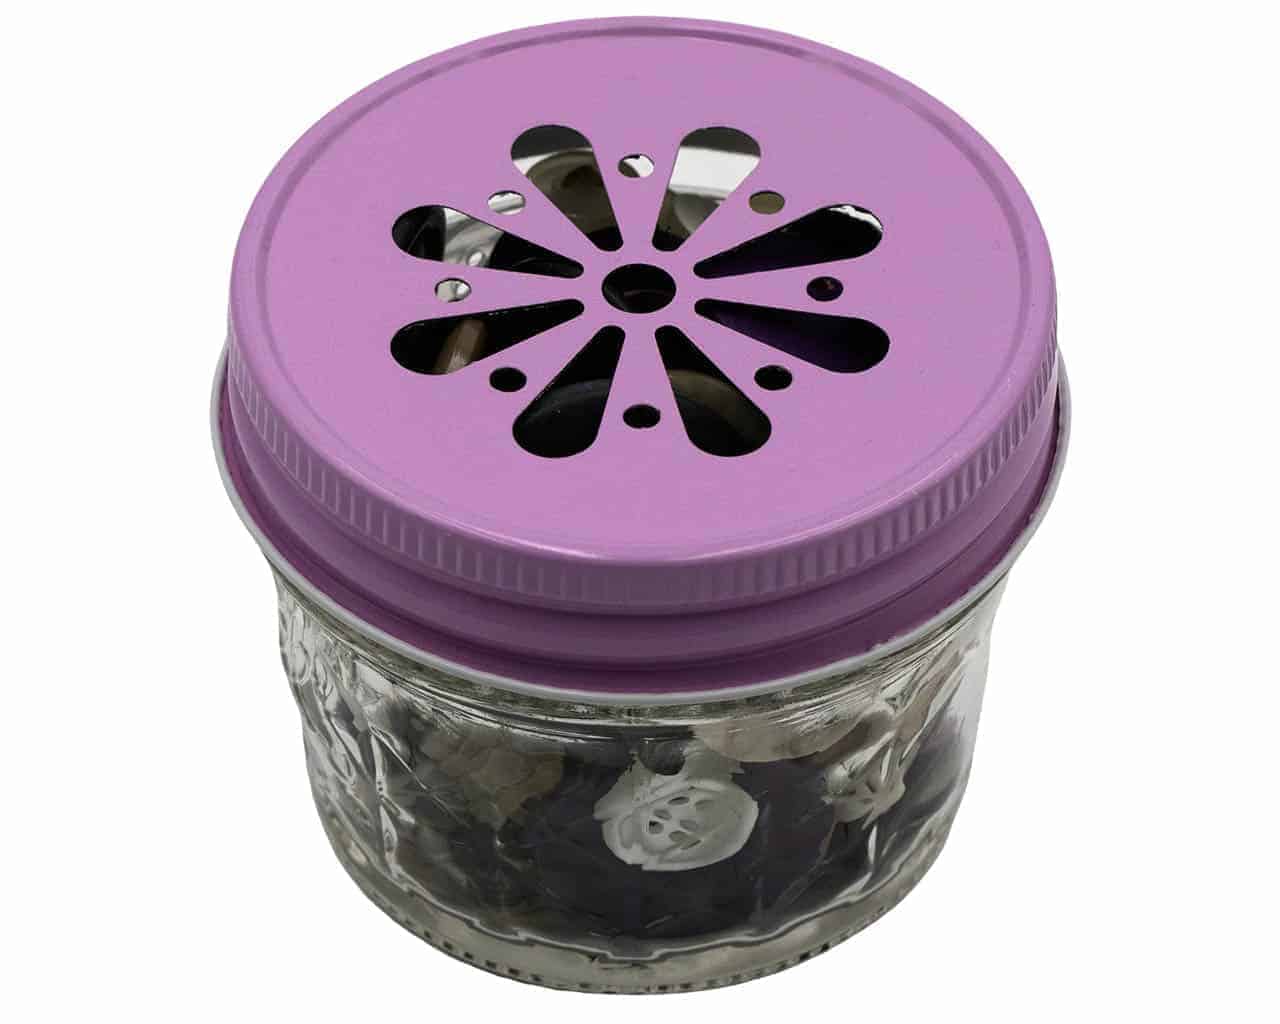 4 oz Mason Glass Jar with Lid - Choose from Flat, Safety Button, Straw  Hole, Daisy Cut